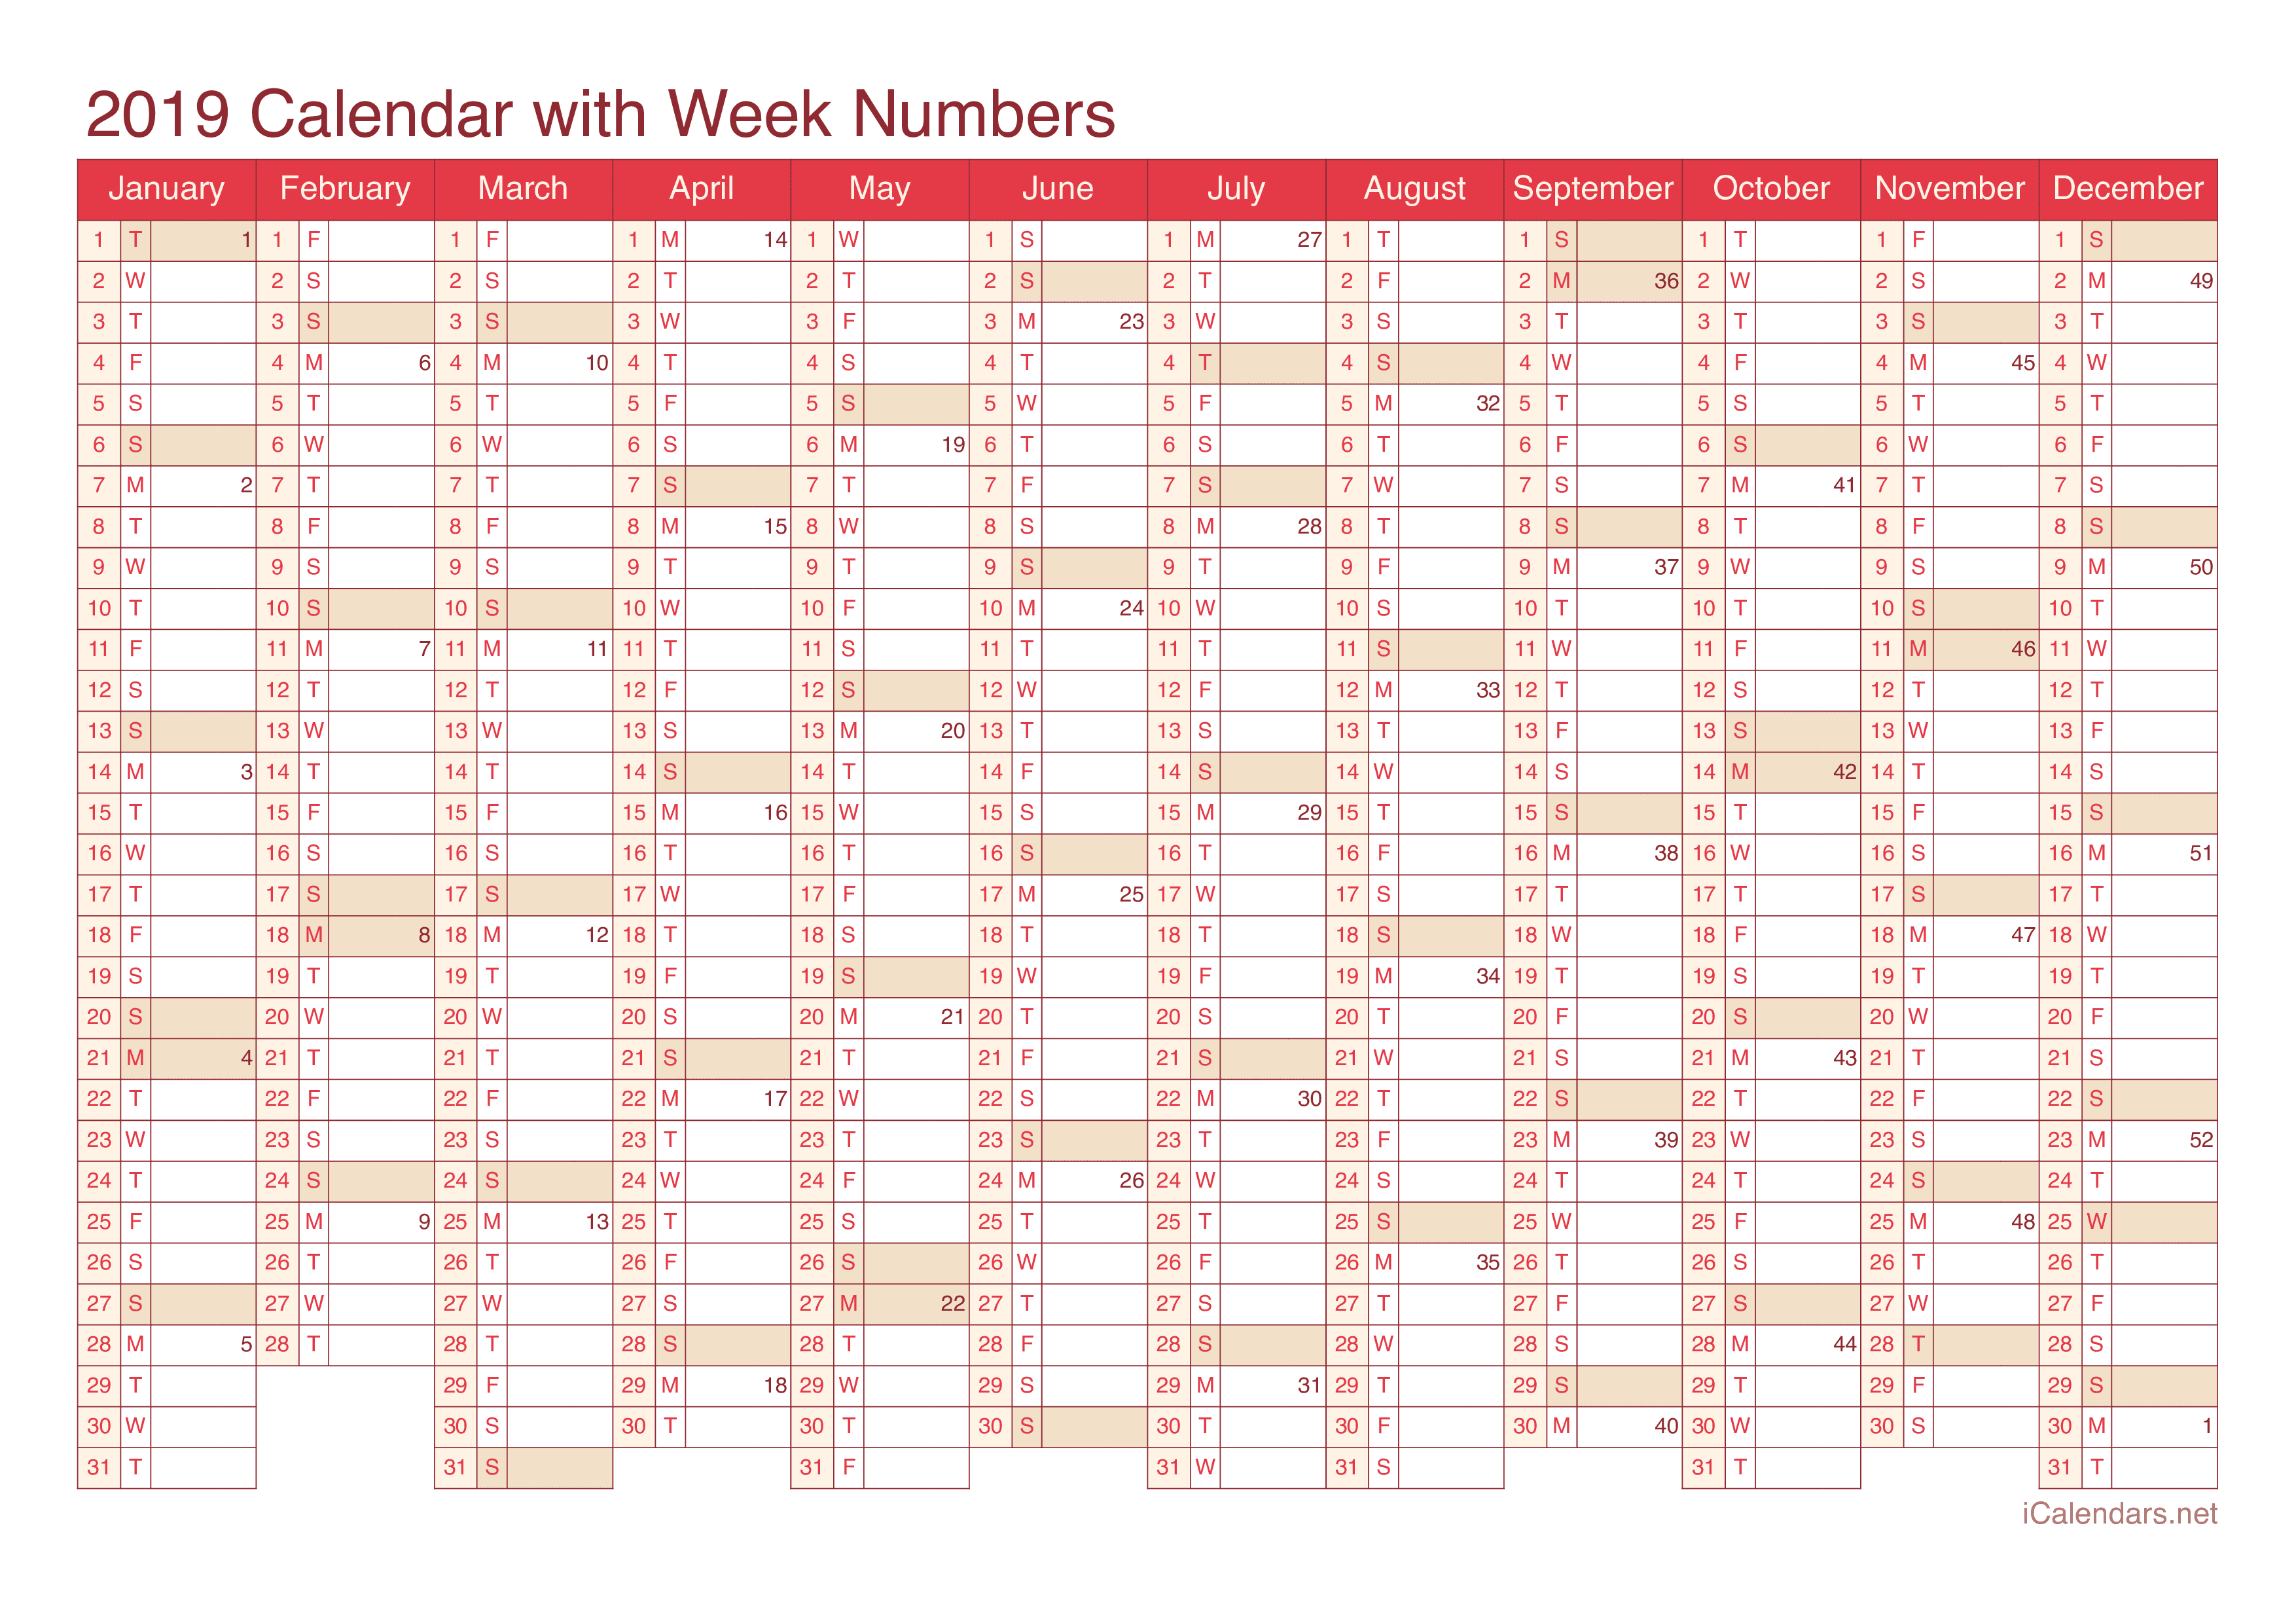 2019 Calendar with week numbers - Cherry